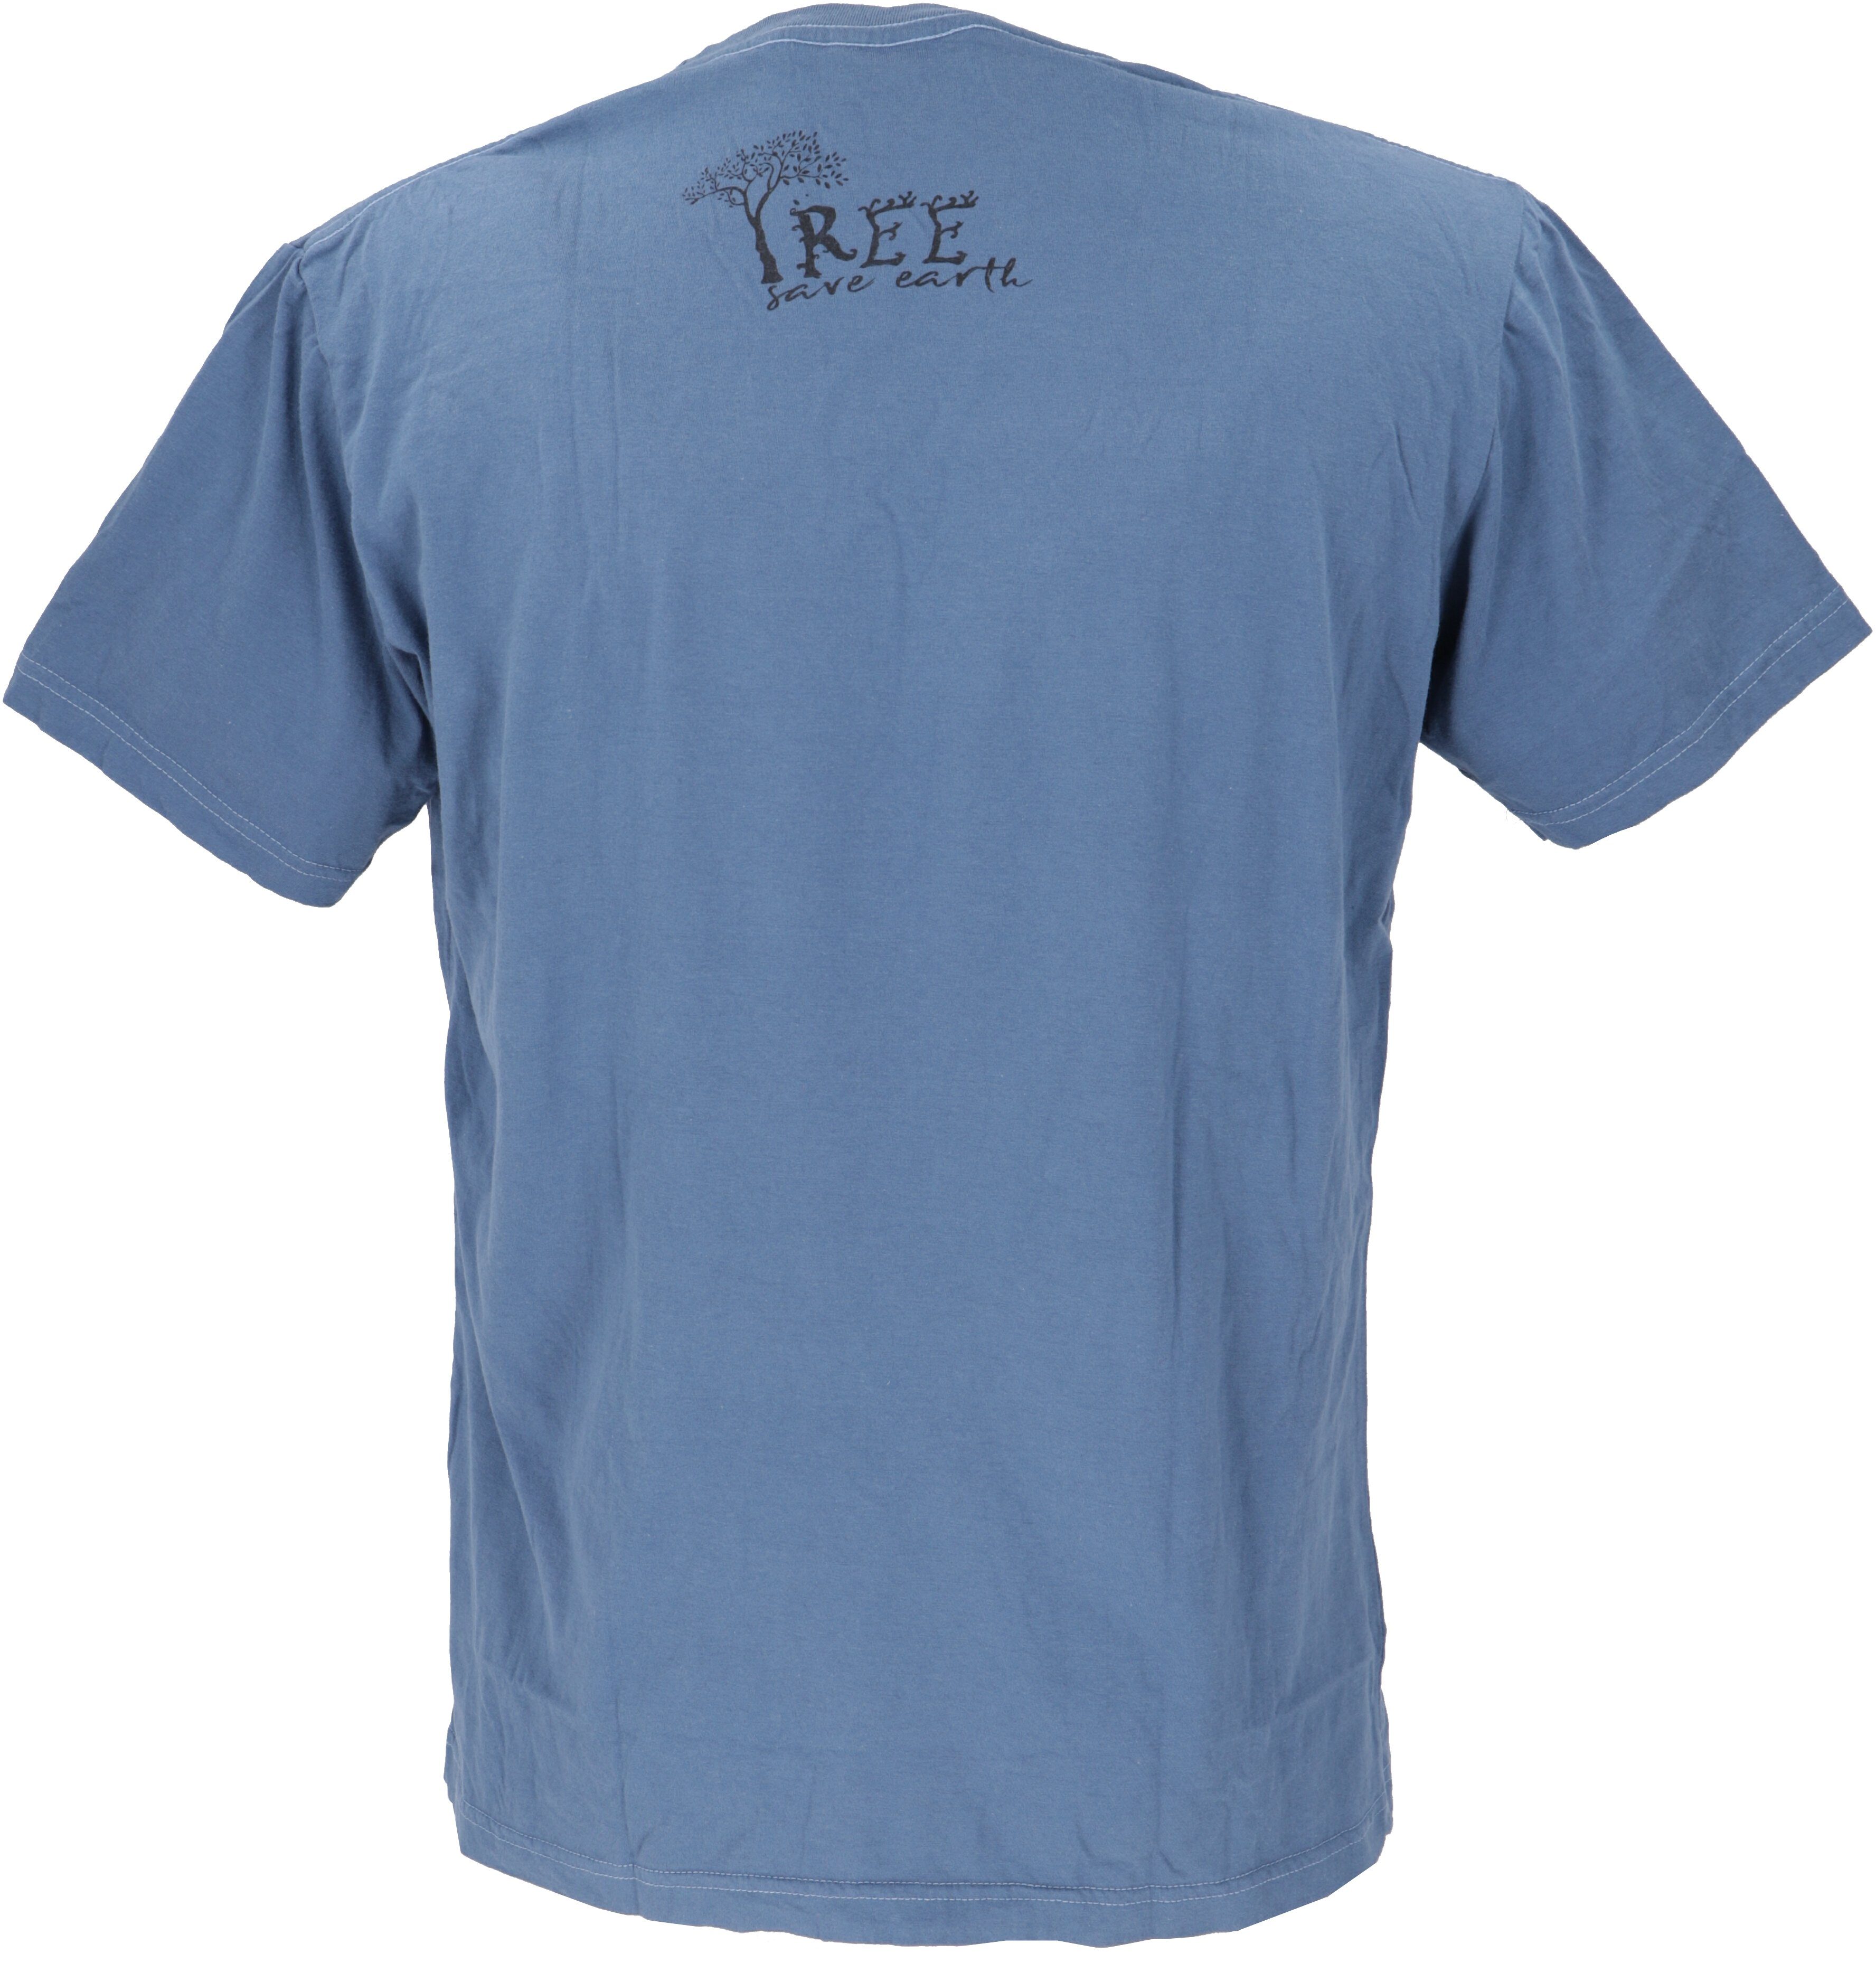 - T-Shirt Finger T-Shirt Guru-Shop Retro earth print/blau Finger.. save Tree Retro T-Shirt,